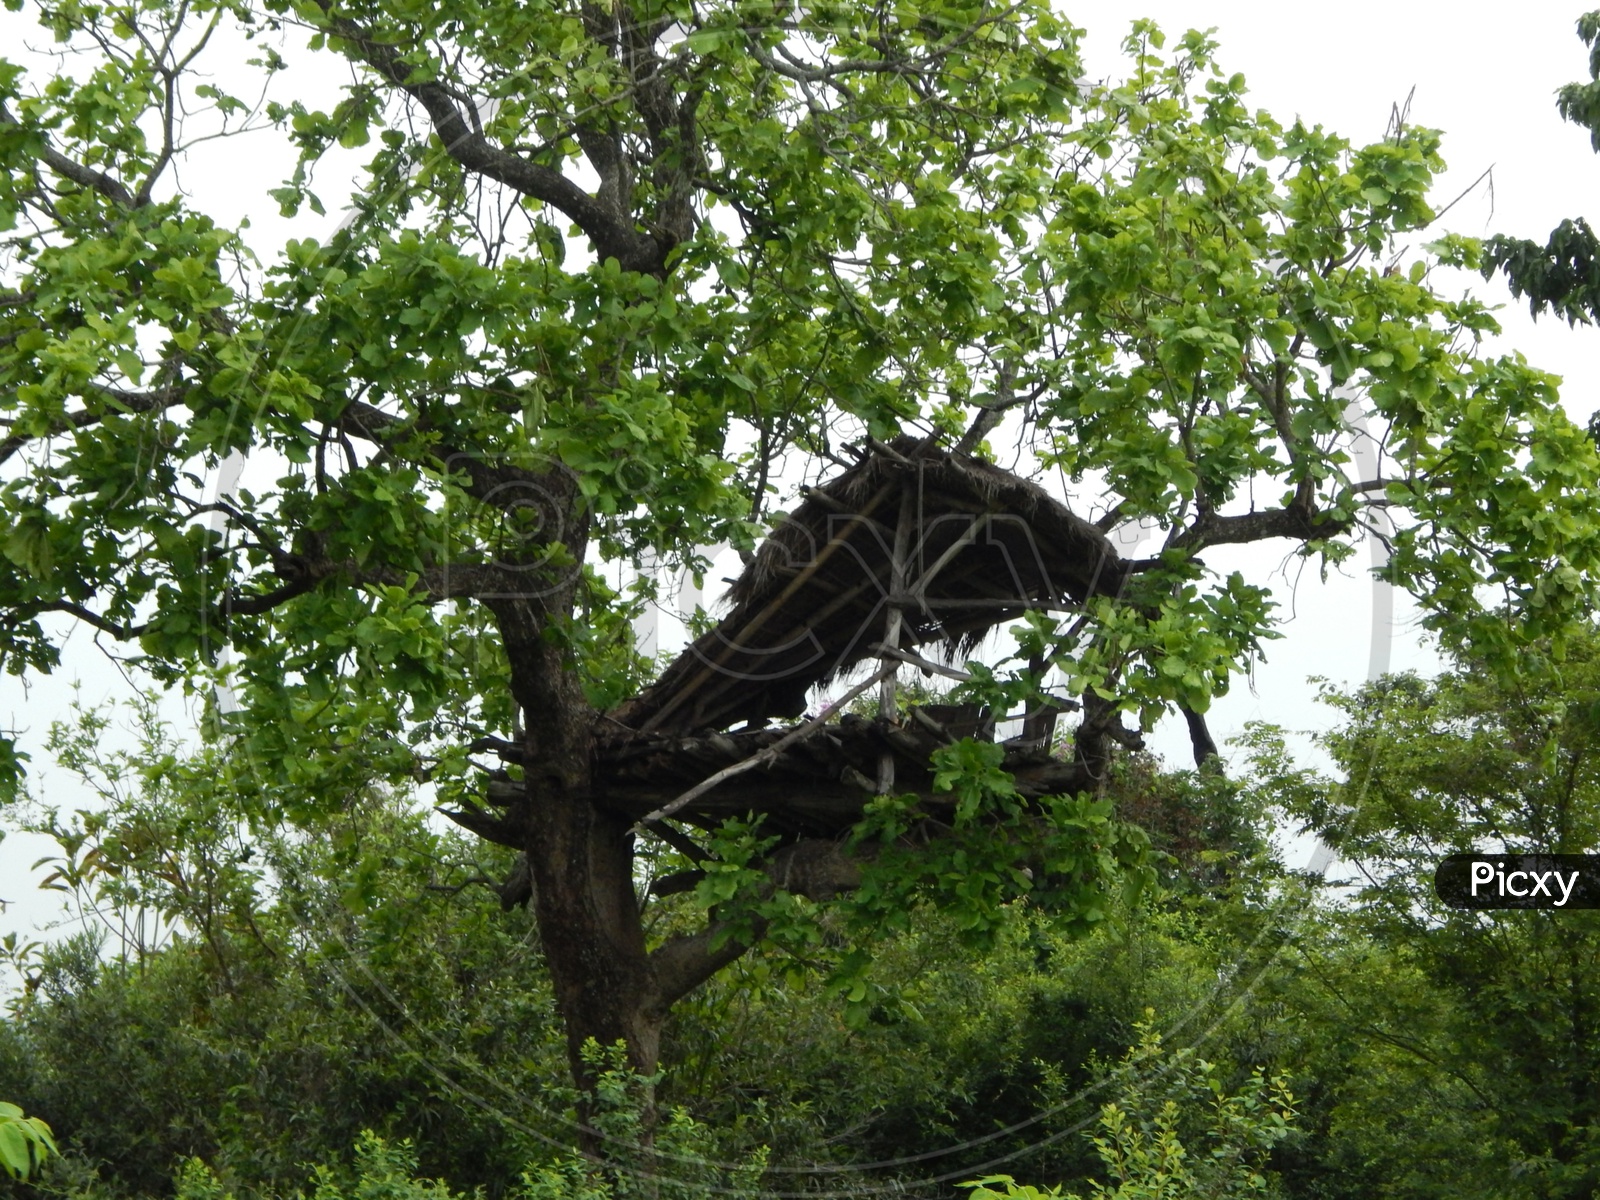 Kaziranga national park